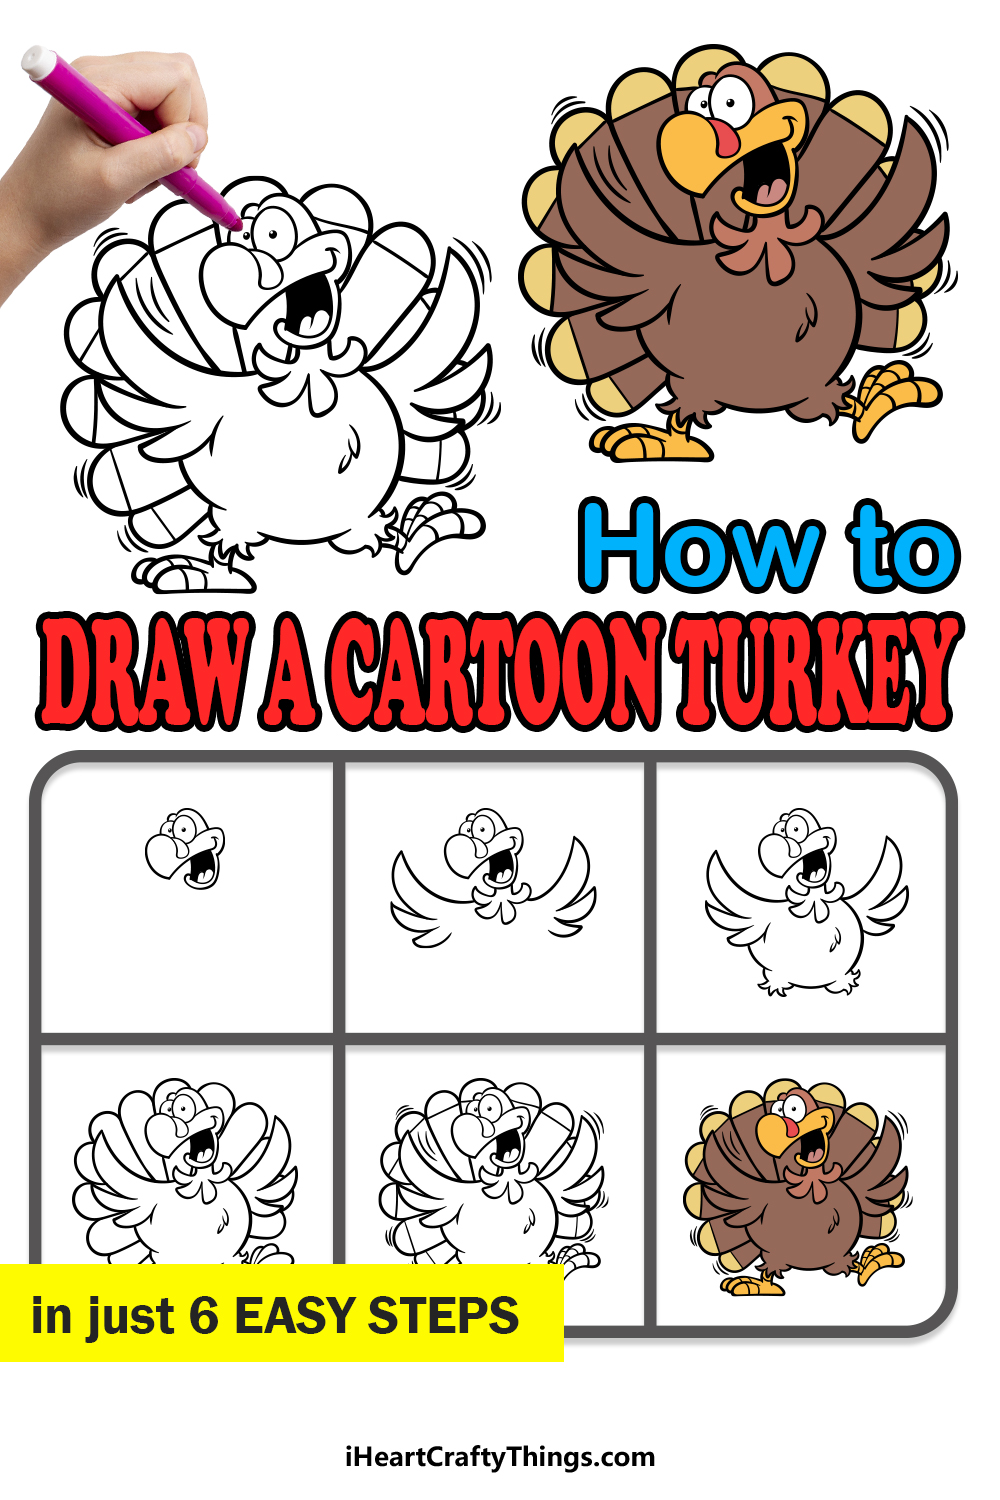 how to draw a cartoon turkey in 6 easy steps